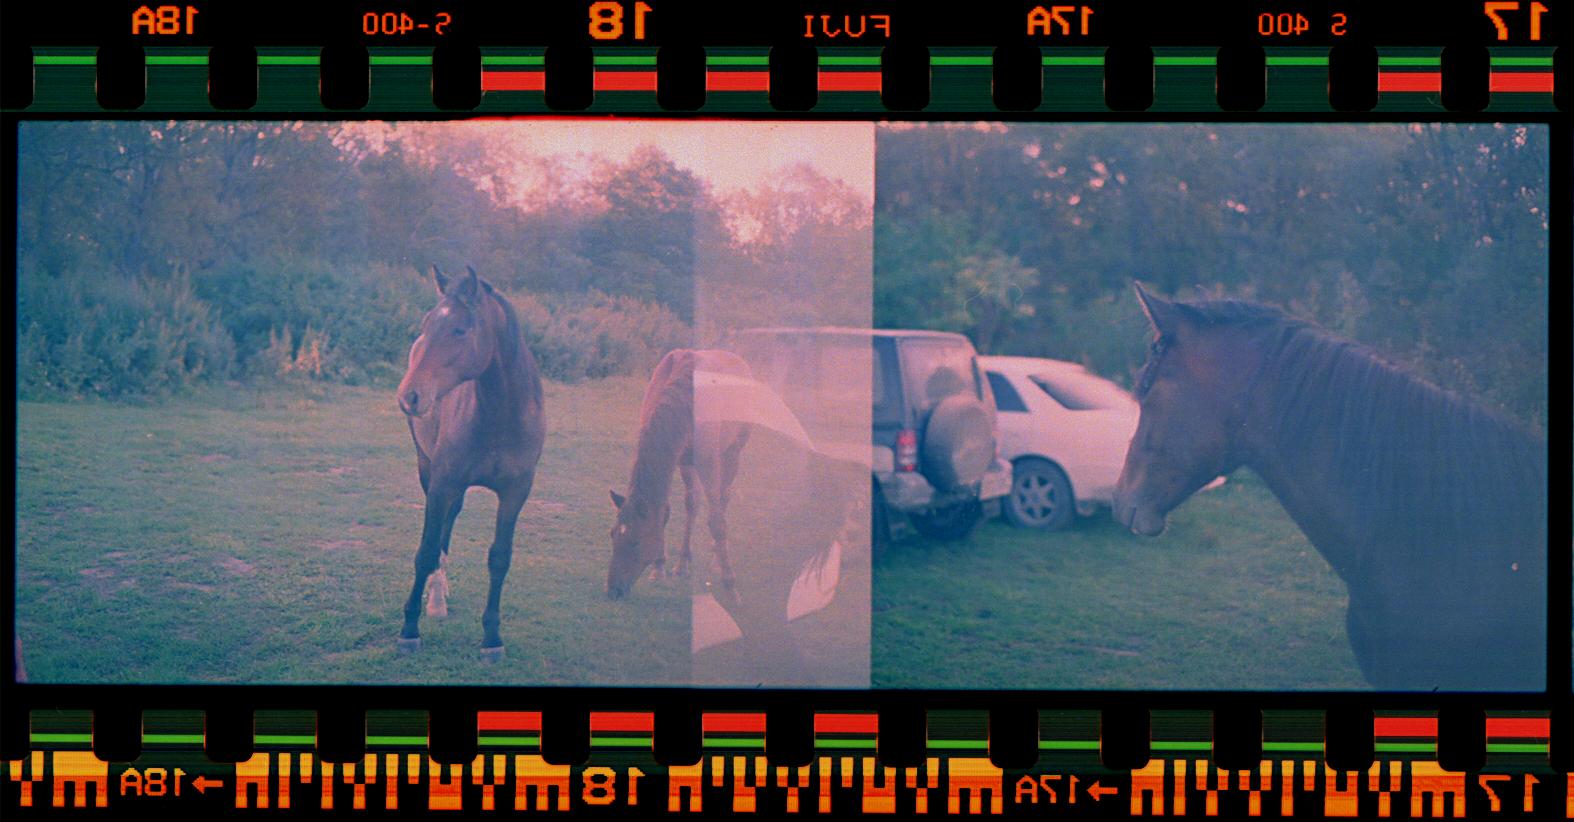 horse-car!, nefardepp